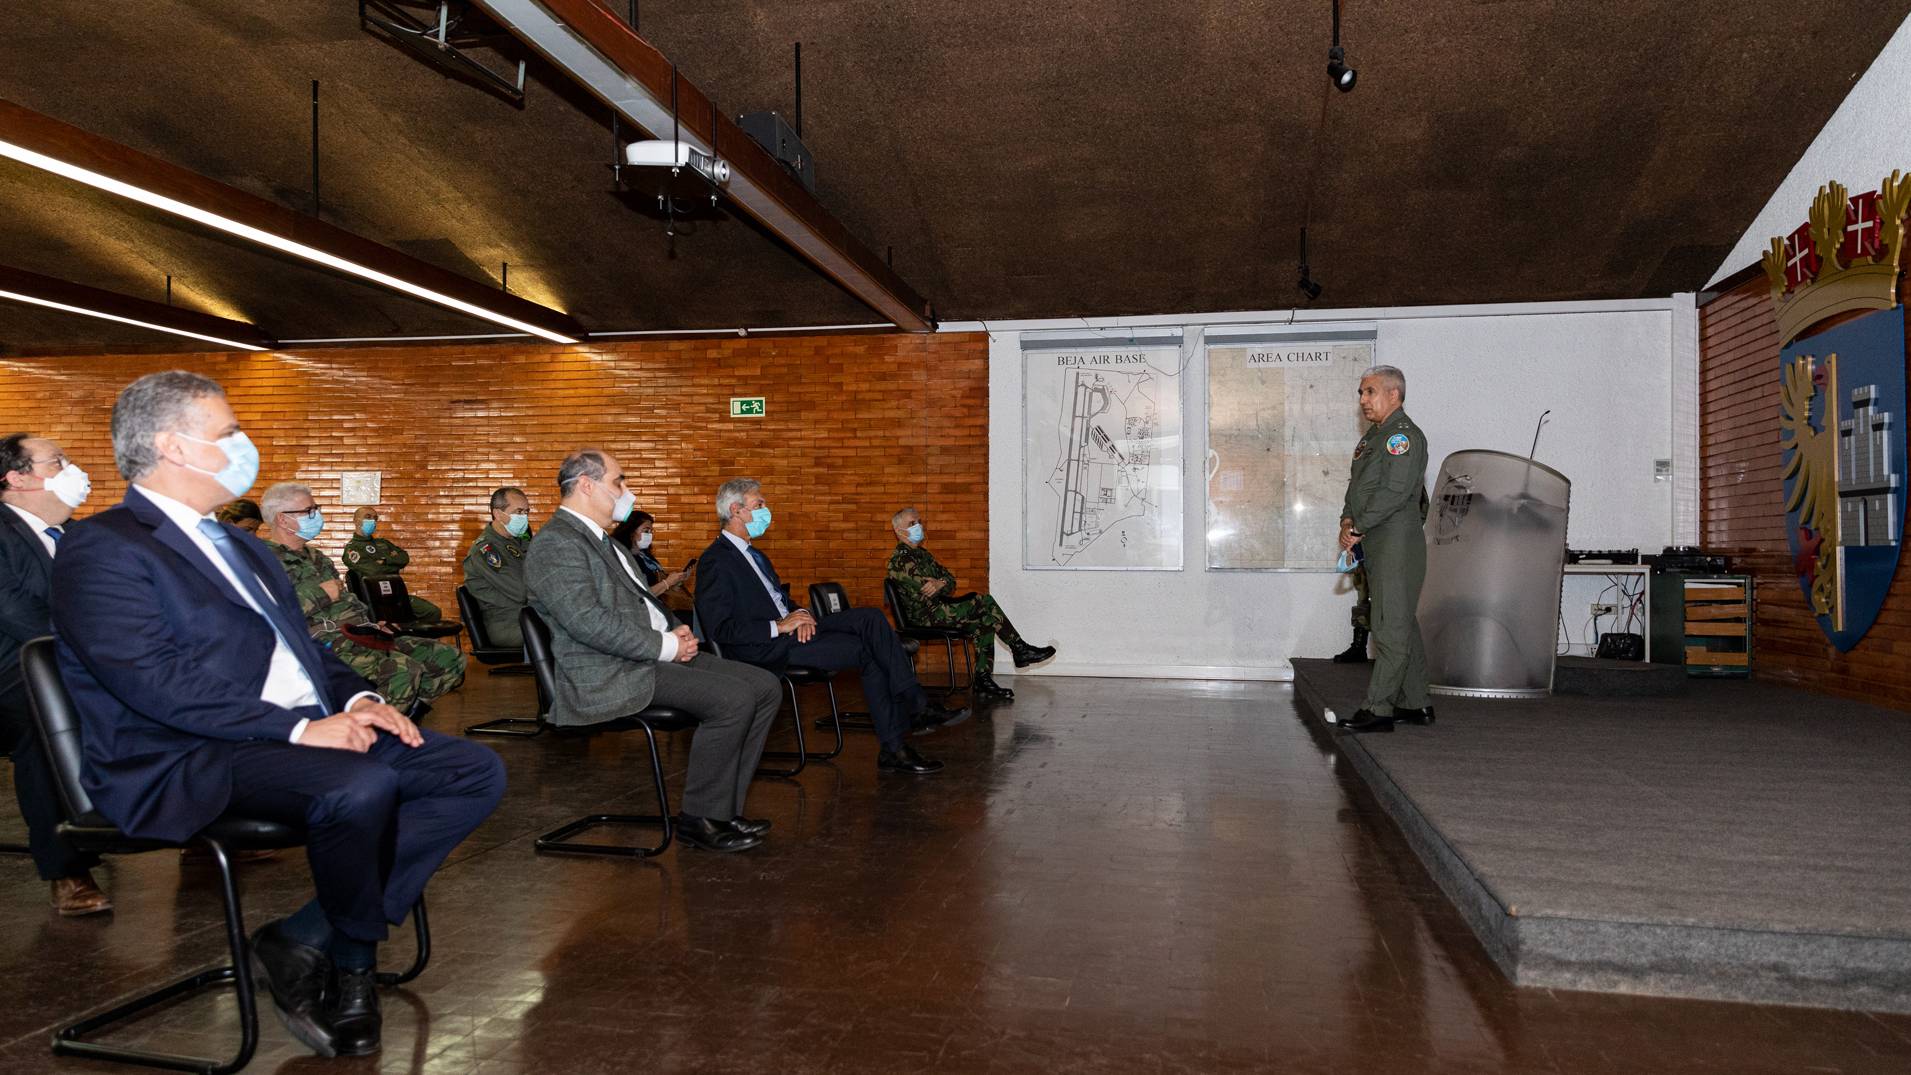 Ministro da Defesa Nacional visita Base Area N. 11 em Beja